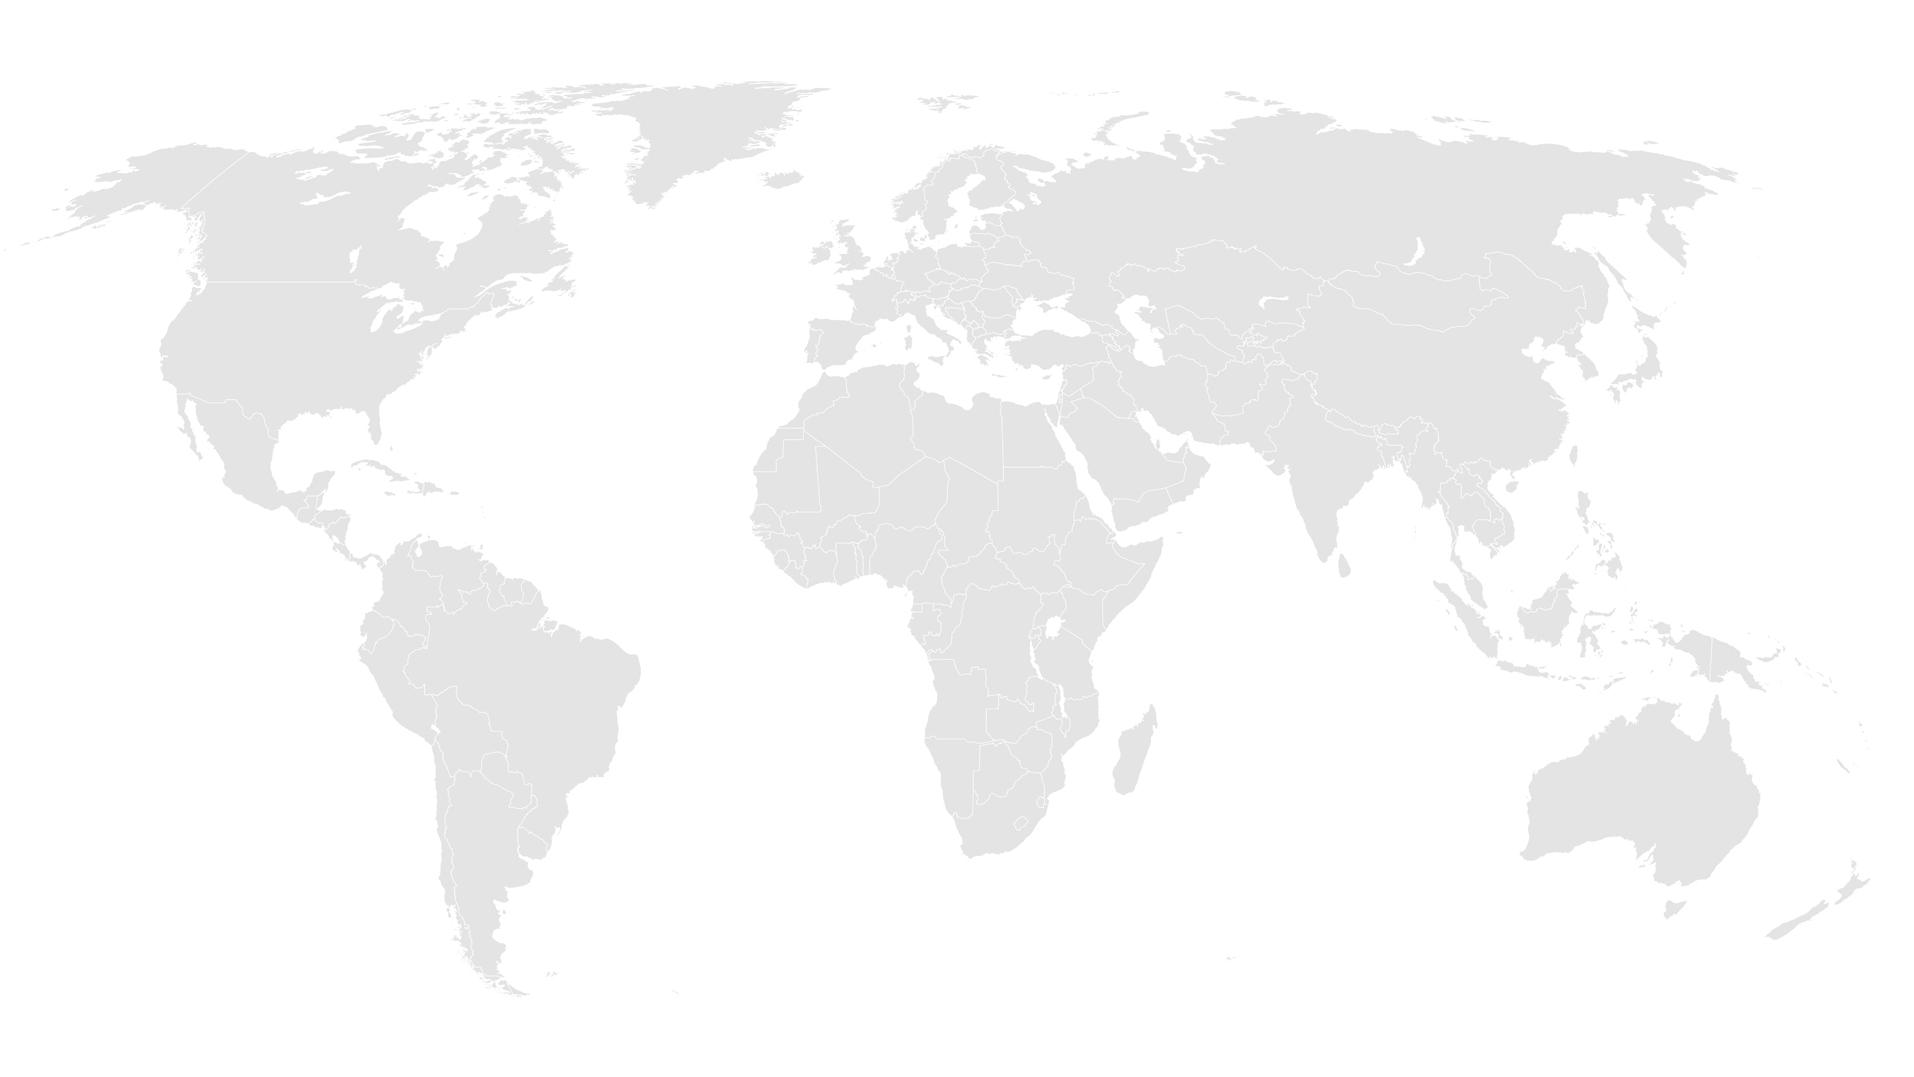 ZEISS locations worldwide